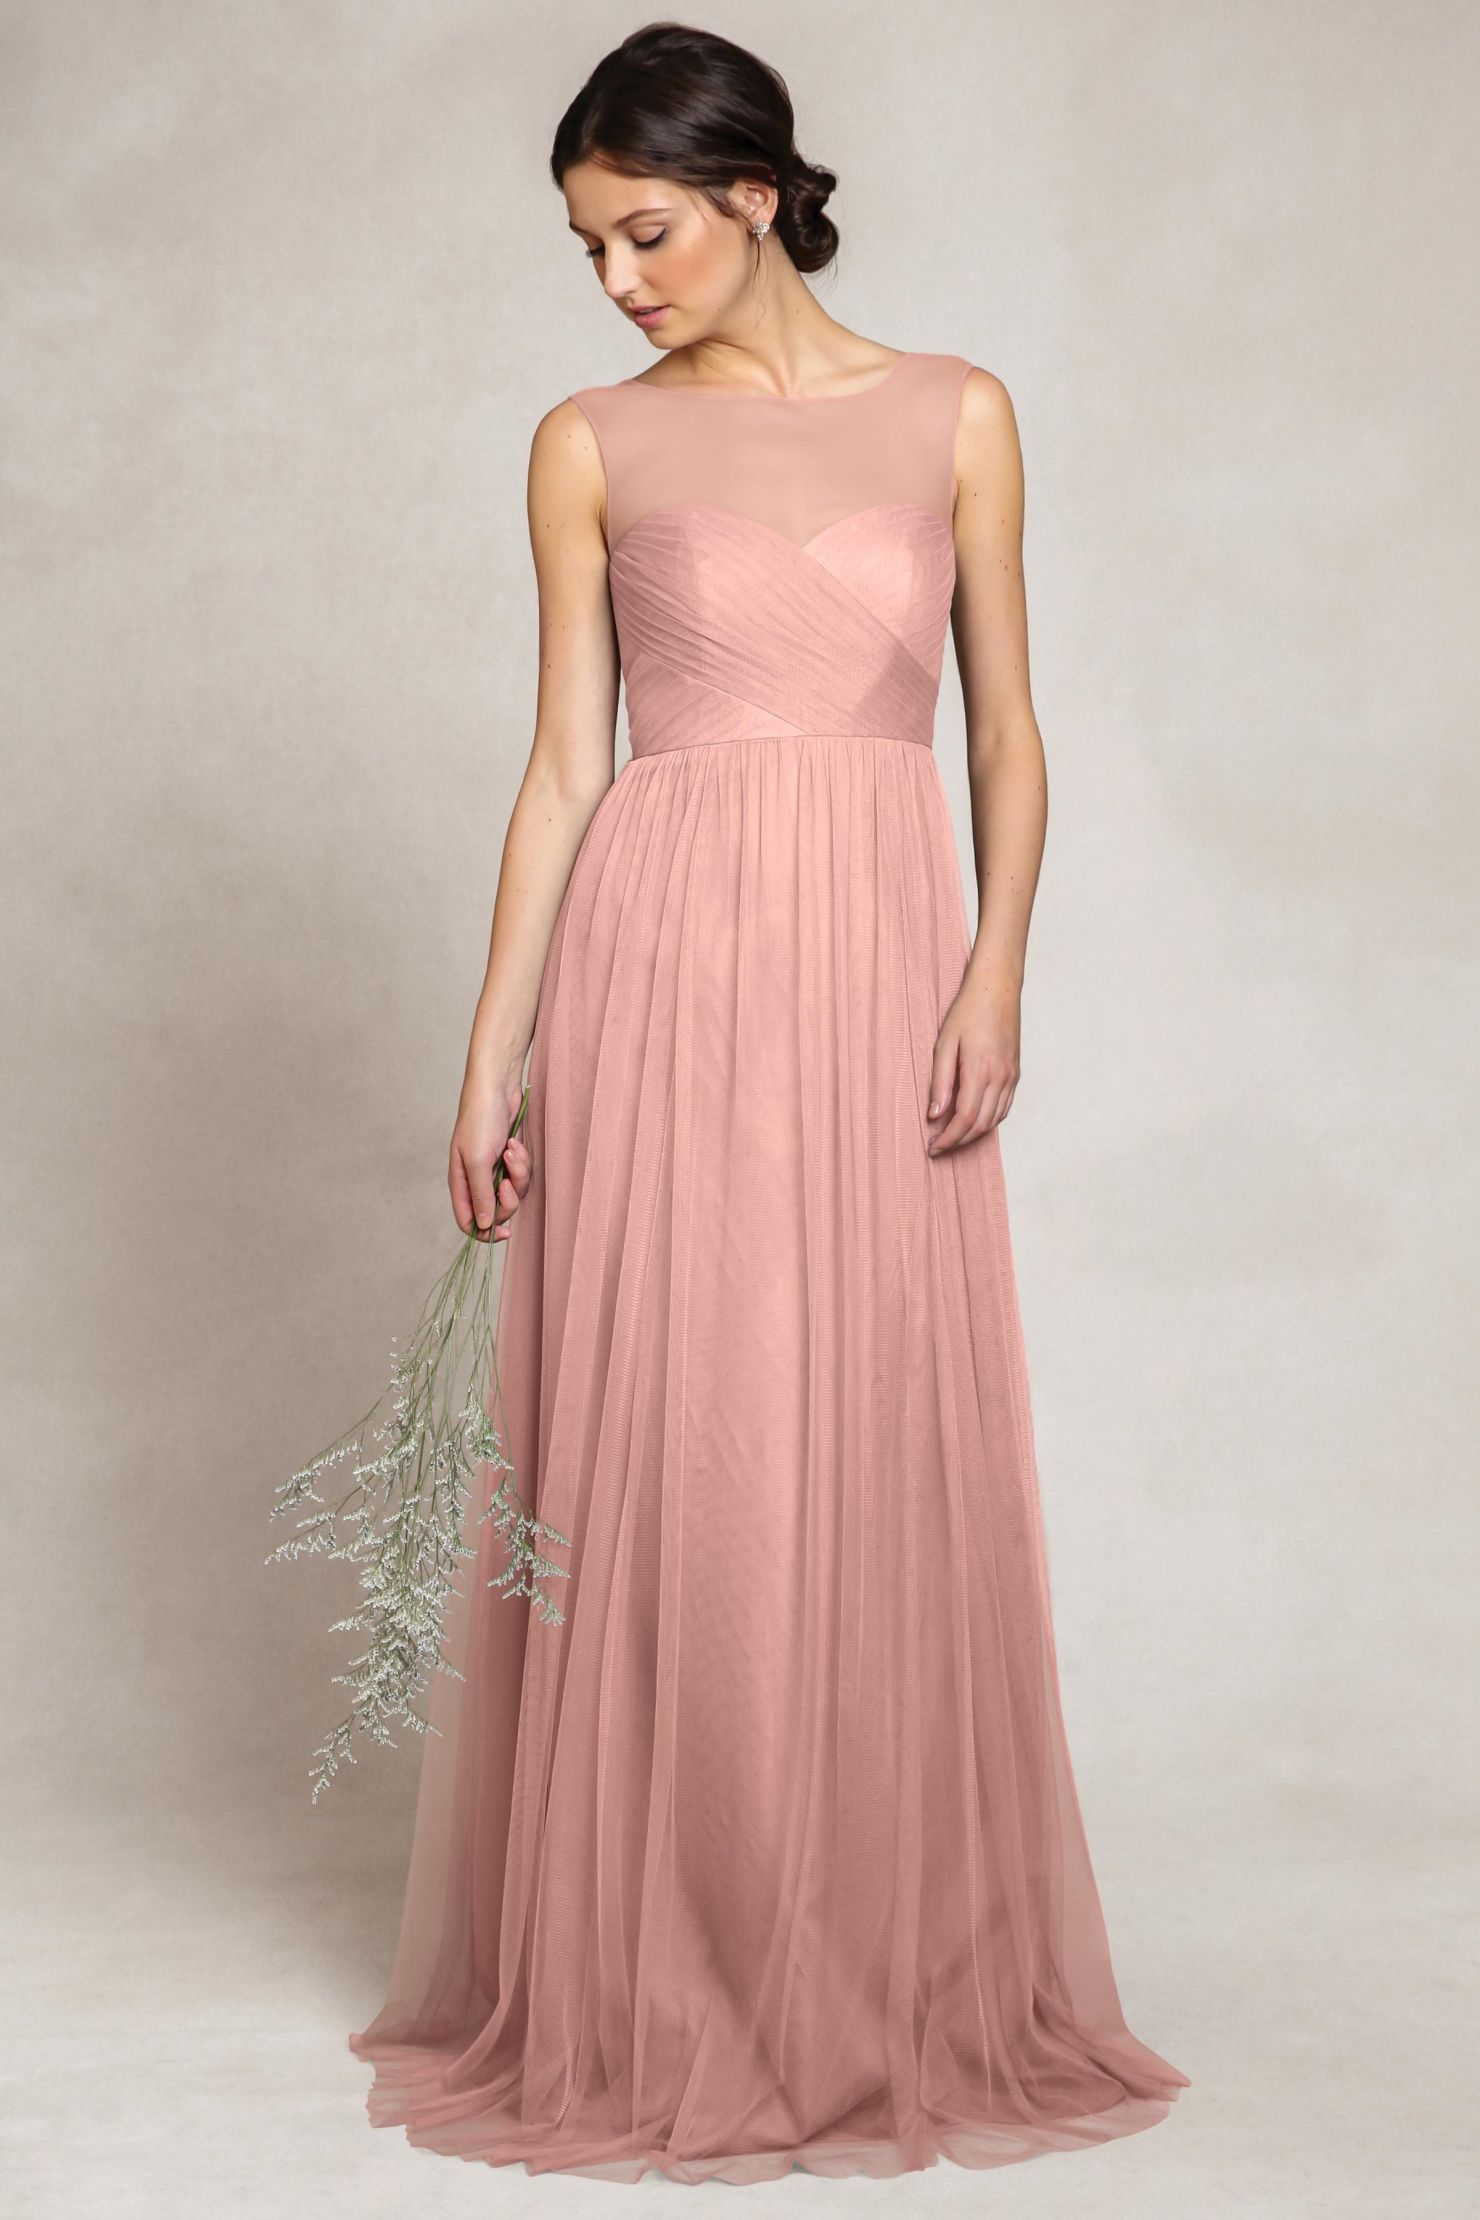 begonia color bridesmaid dresses